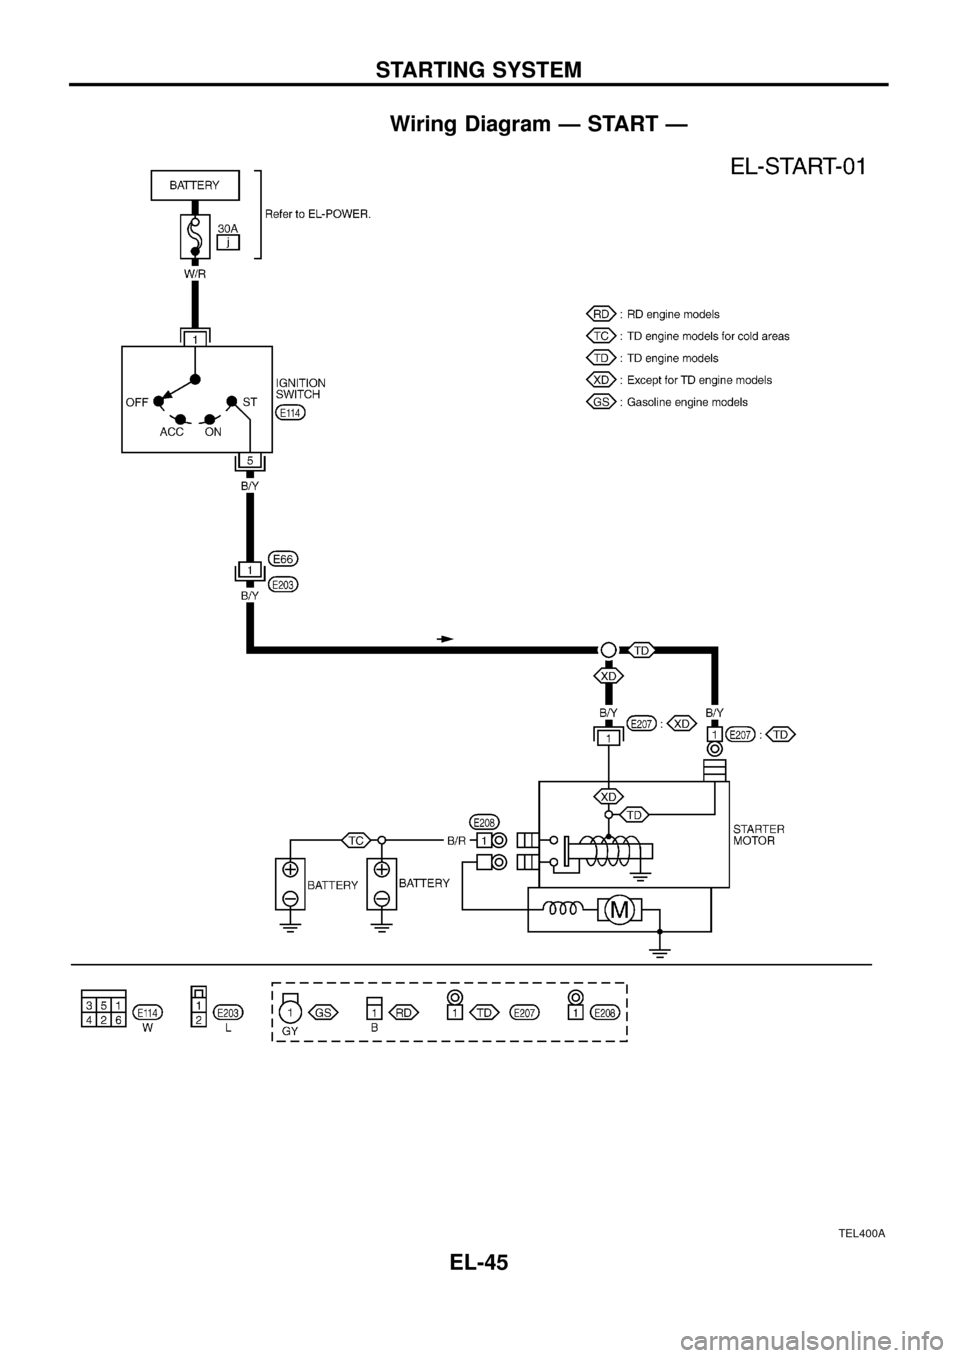 NISSAN PATROL 1998 Y61 / 5.G Electrical System Service Manual Wiring Diagram Ð START Ð
TEL400A
STARTING SYSTEM
EL-45 